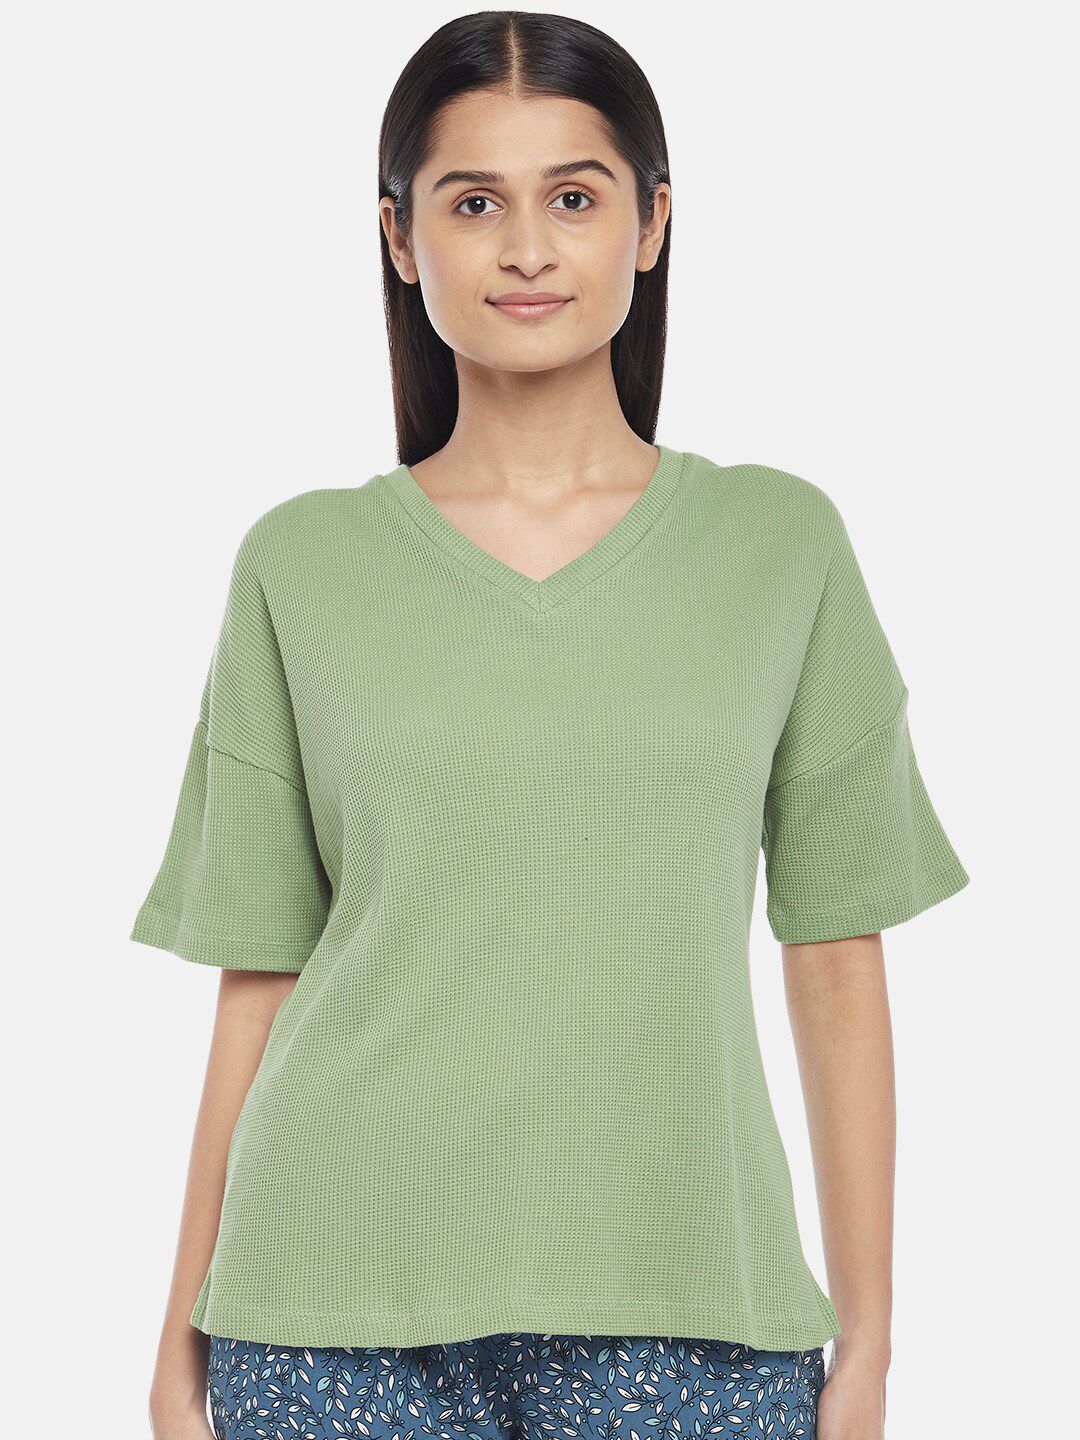 Dreamz by Pantaloons Women Green Regular Lounge tshirt Price in India